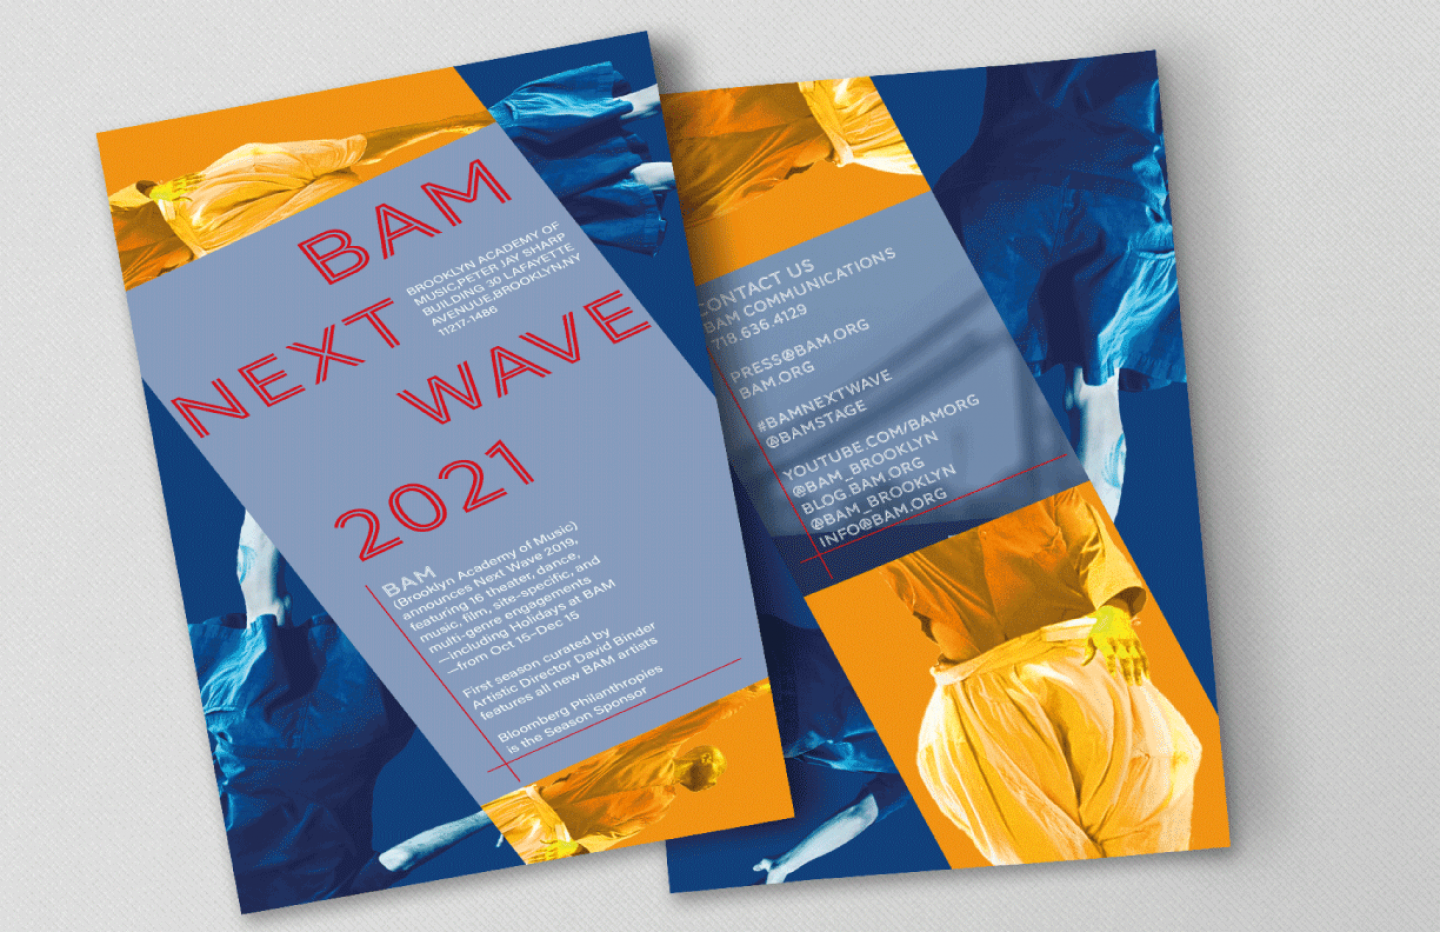 BAM NEXT-WAVE